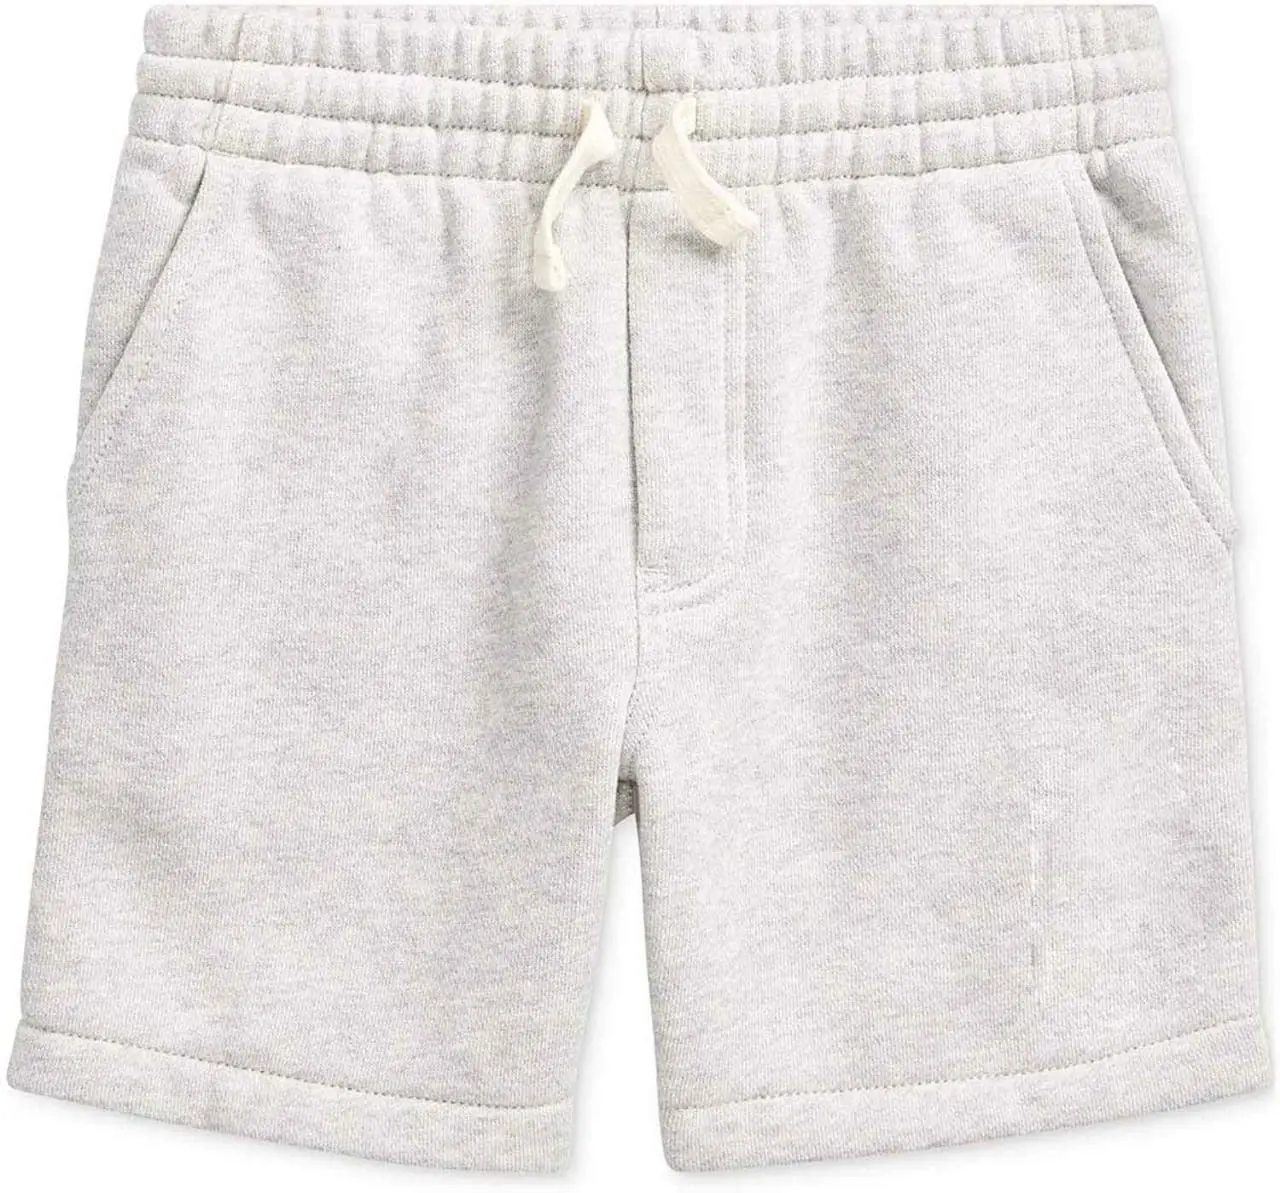 Gym/training cotton fleece sweat shorts,custom fleece shorts for unisex, low cost fleece shorts